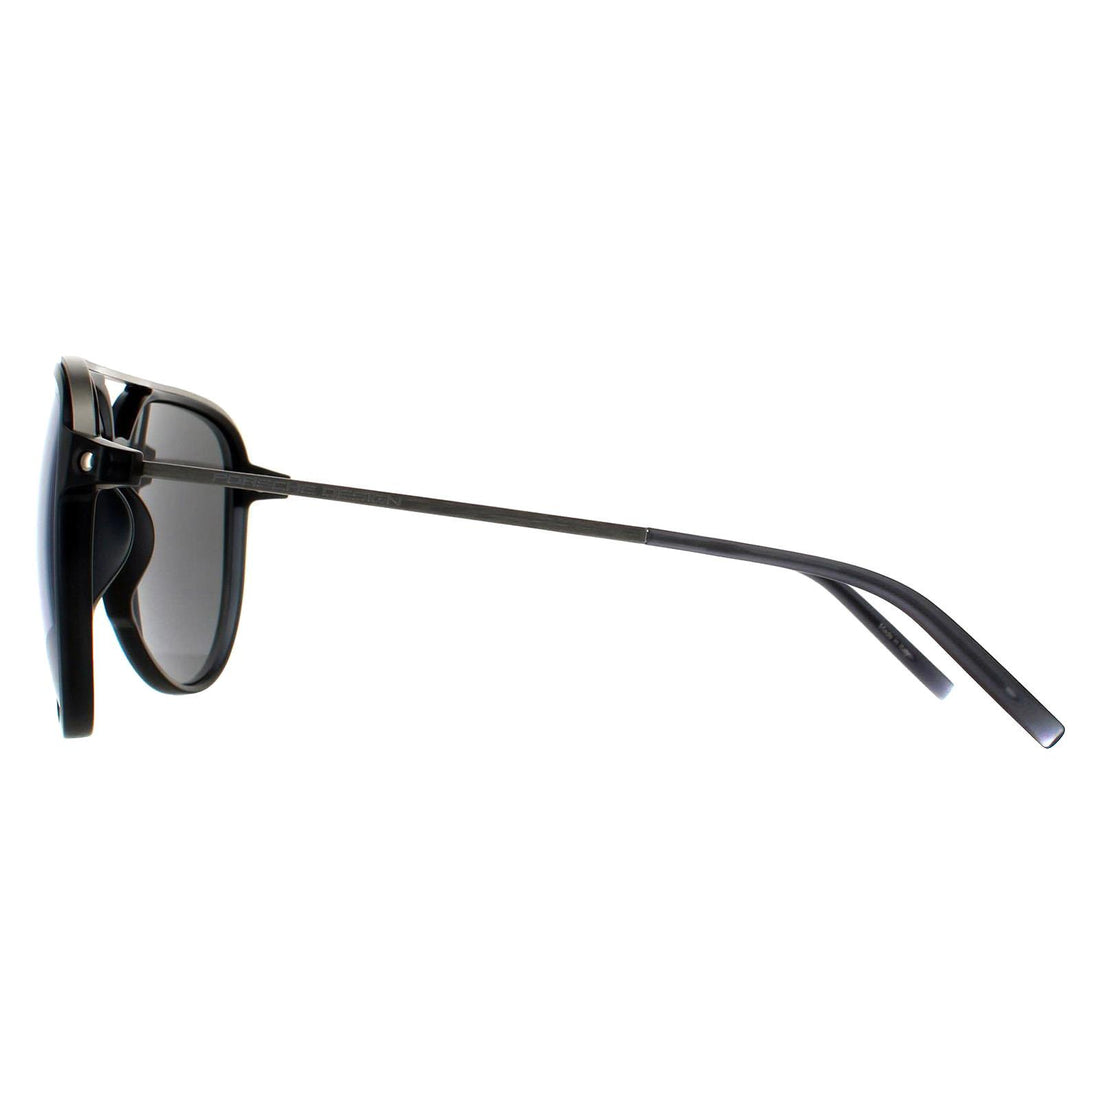 Porsche Design P8912 Sunglasses